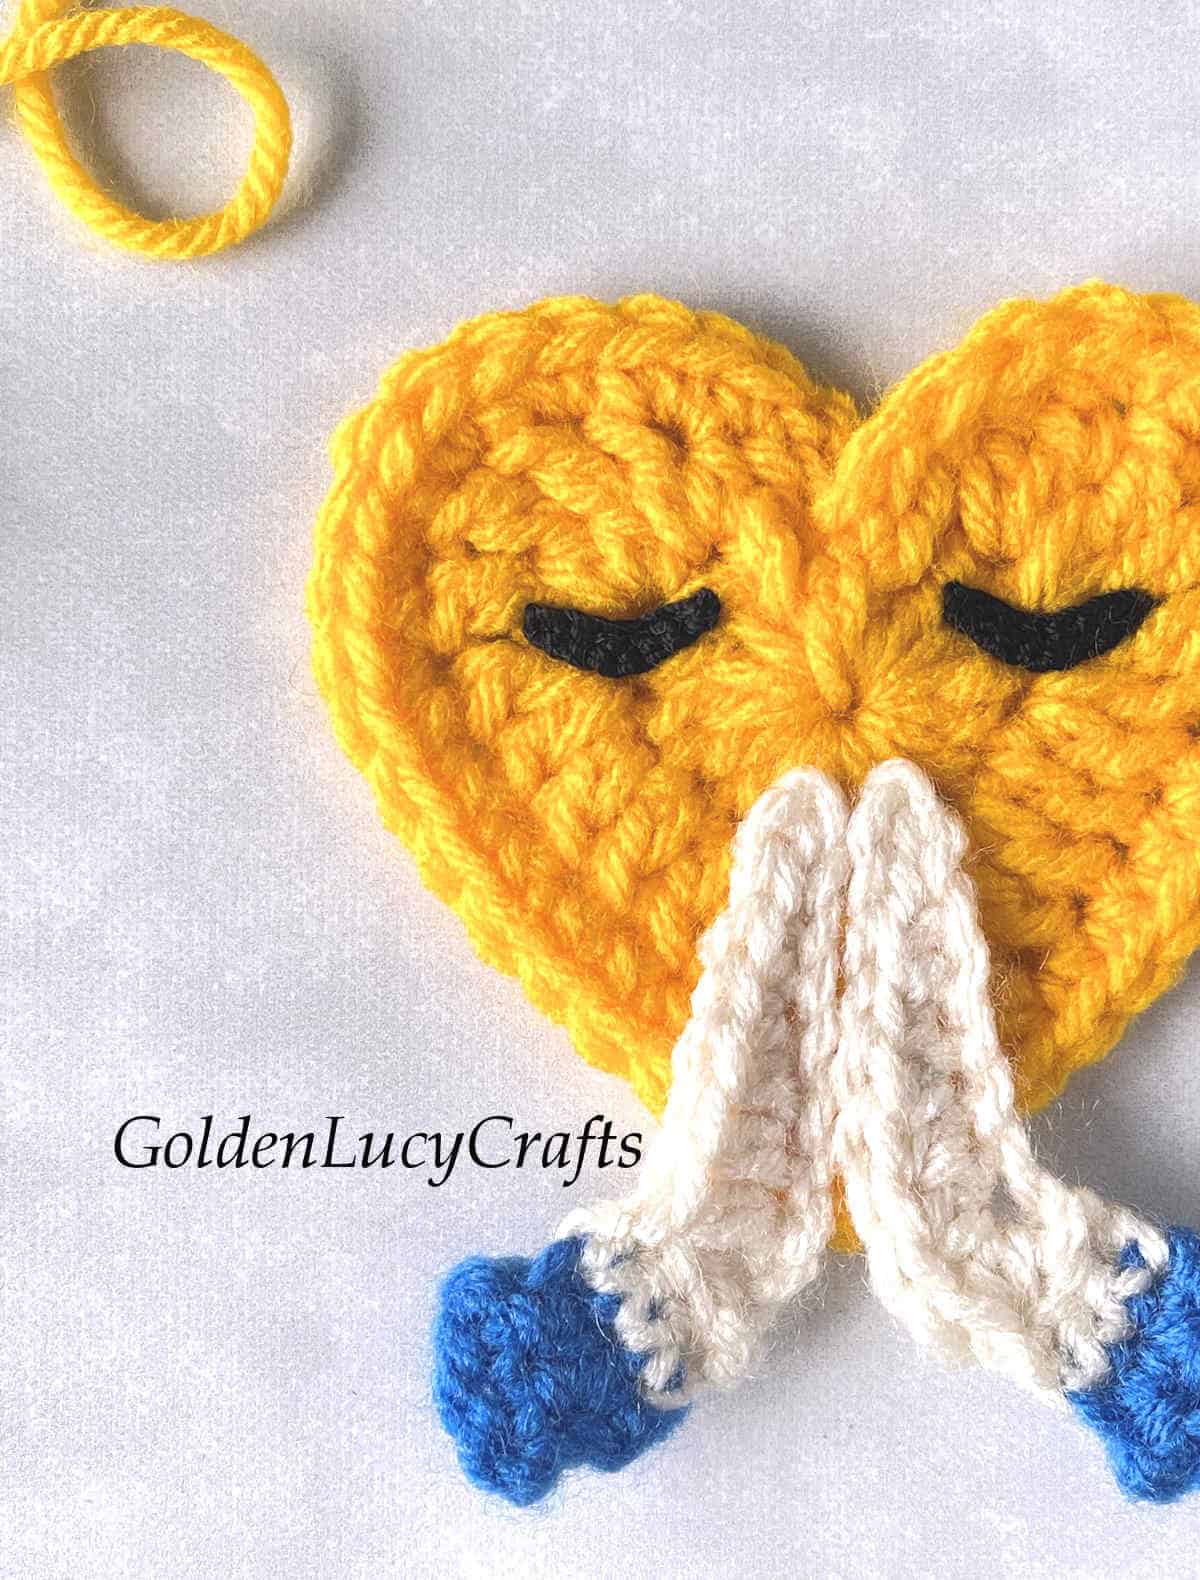 Crochet praying hands emoji close up picture.